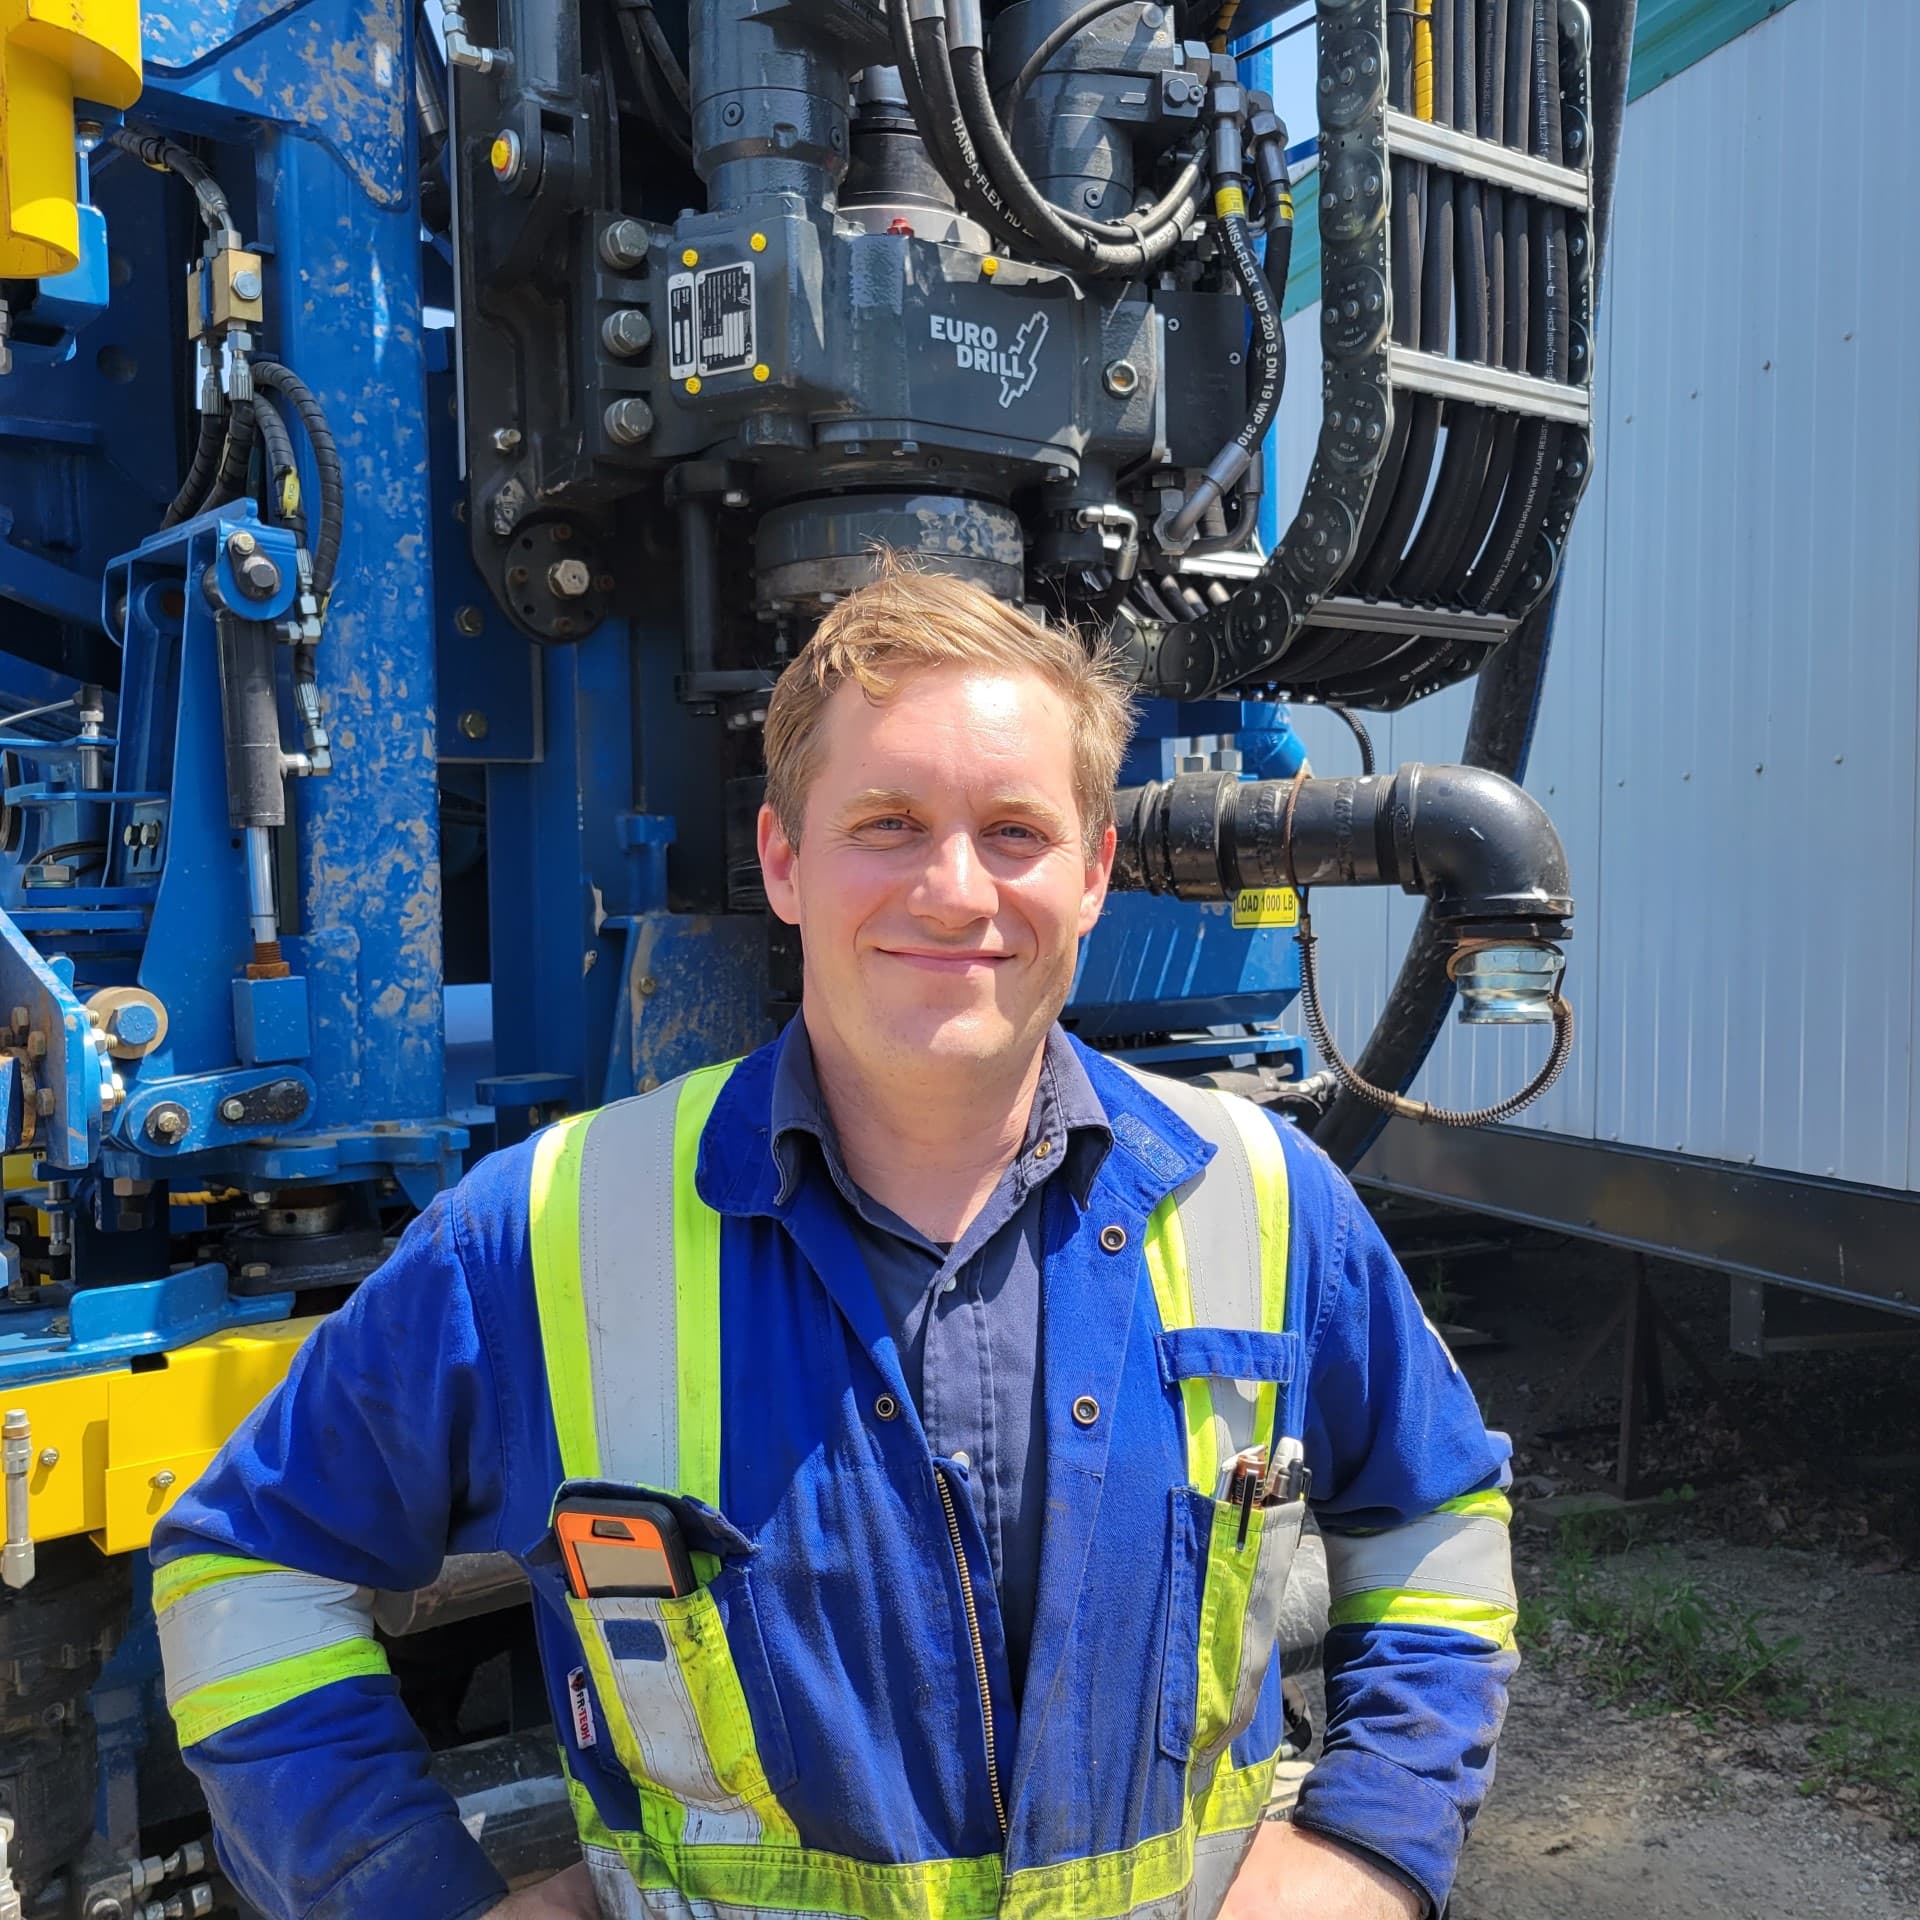 Andrew Selke, Heavy Equipment Technician at Geosource